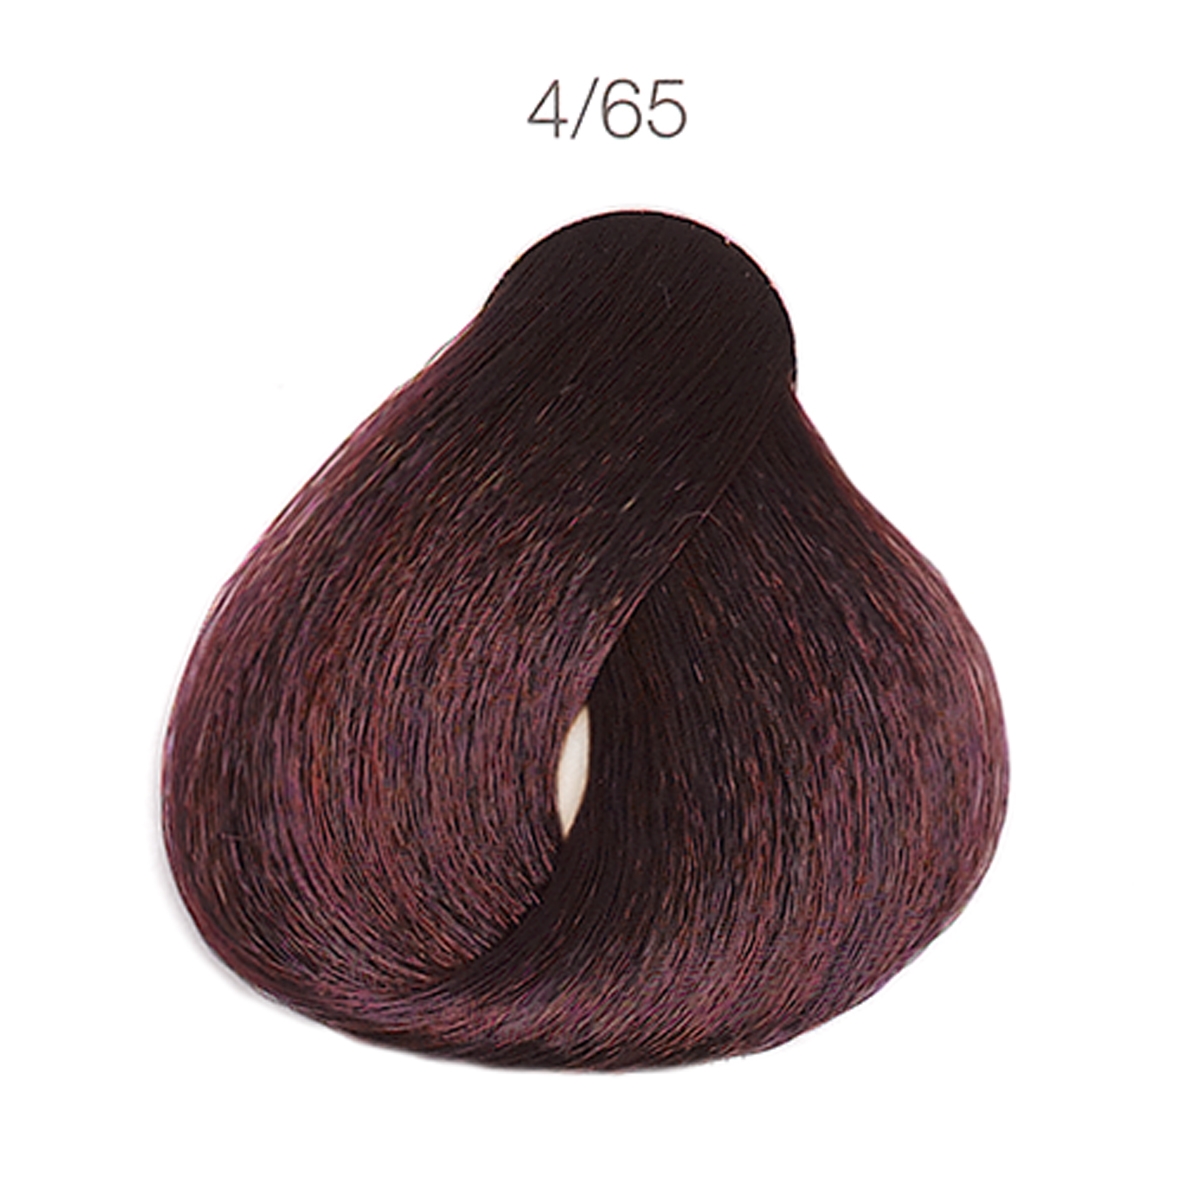 Yunsey Professional Ilusionyst 4/65 - Reddish Violet Medium Brown